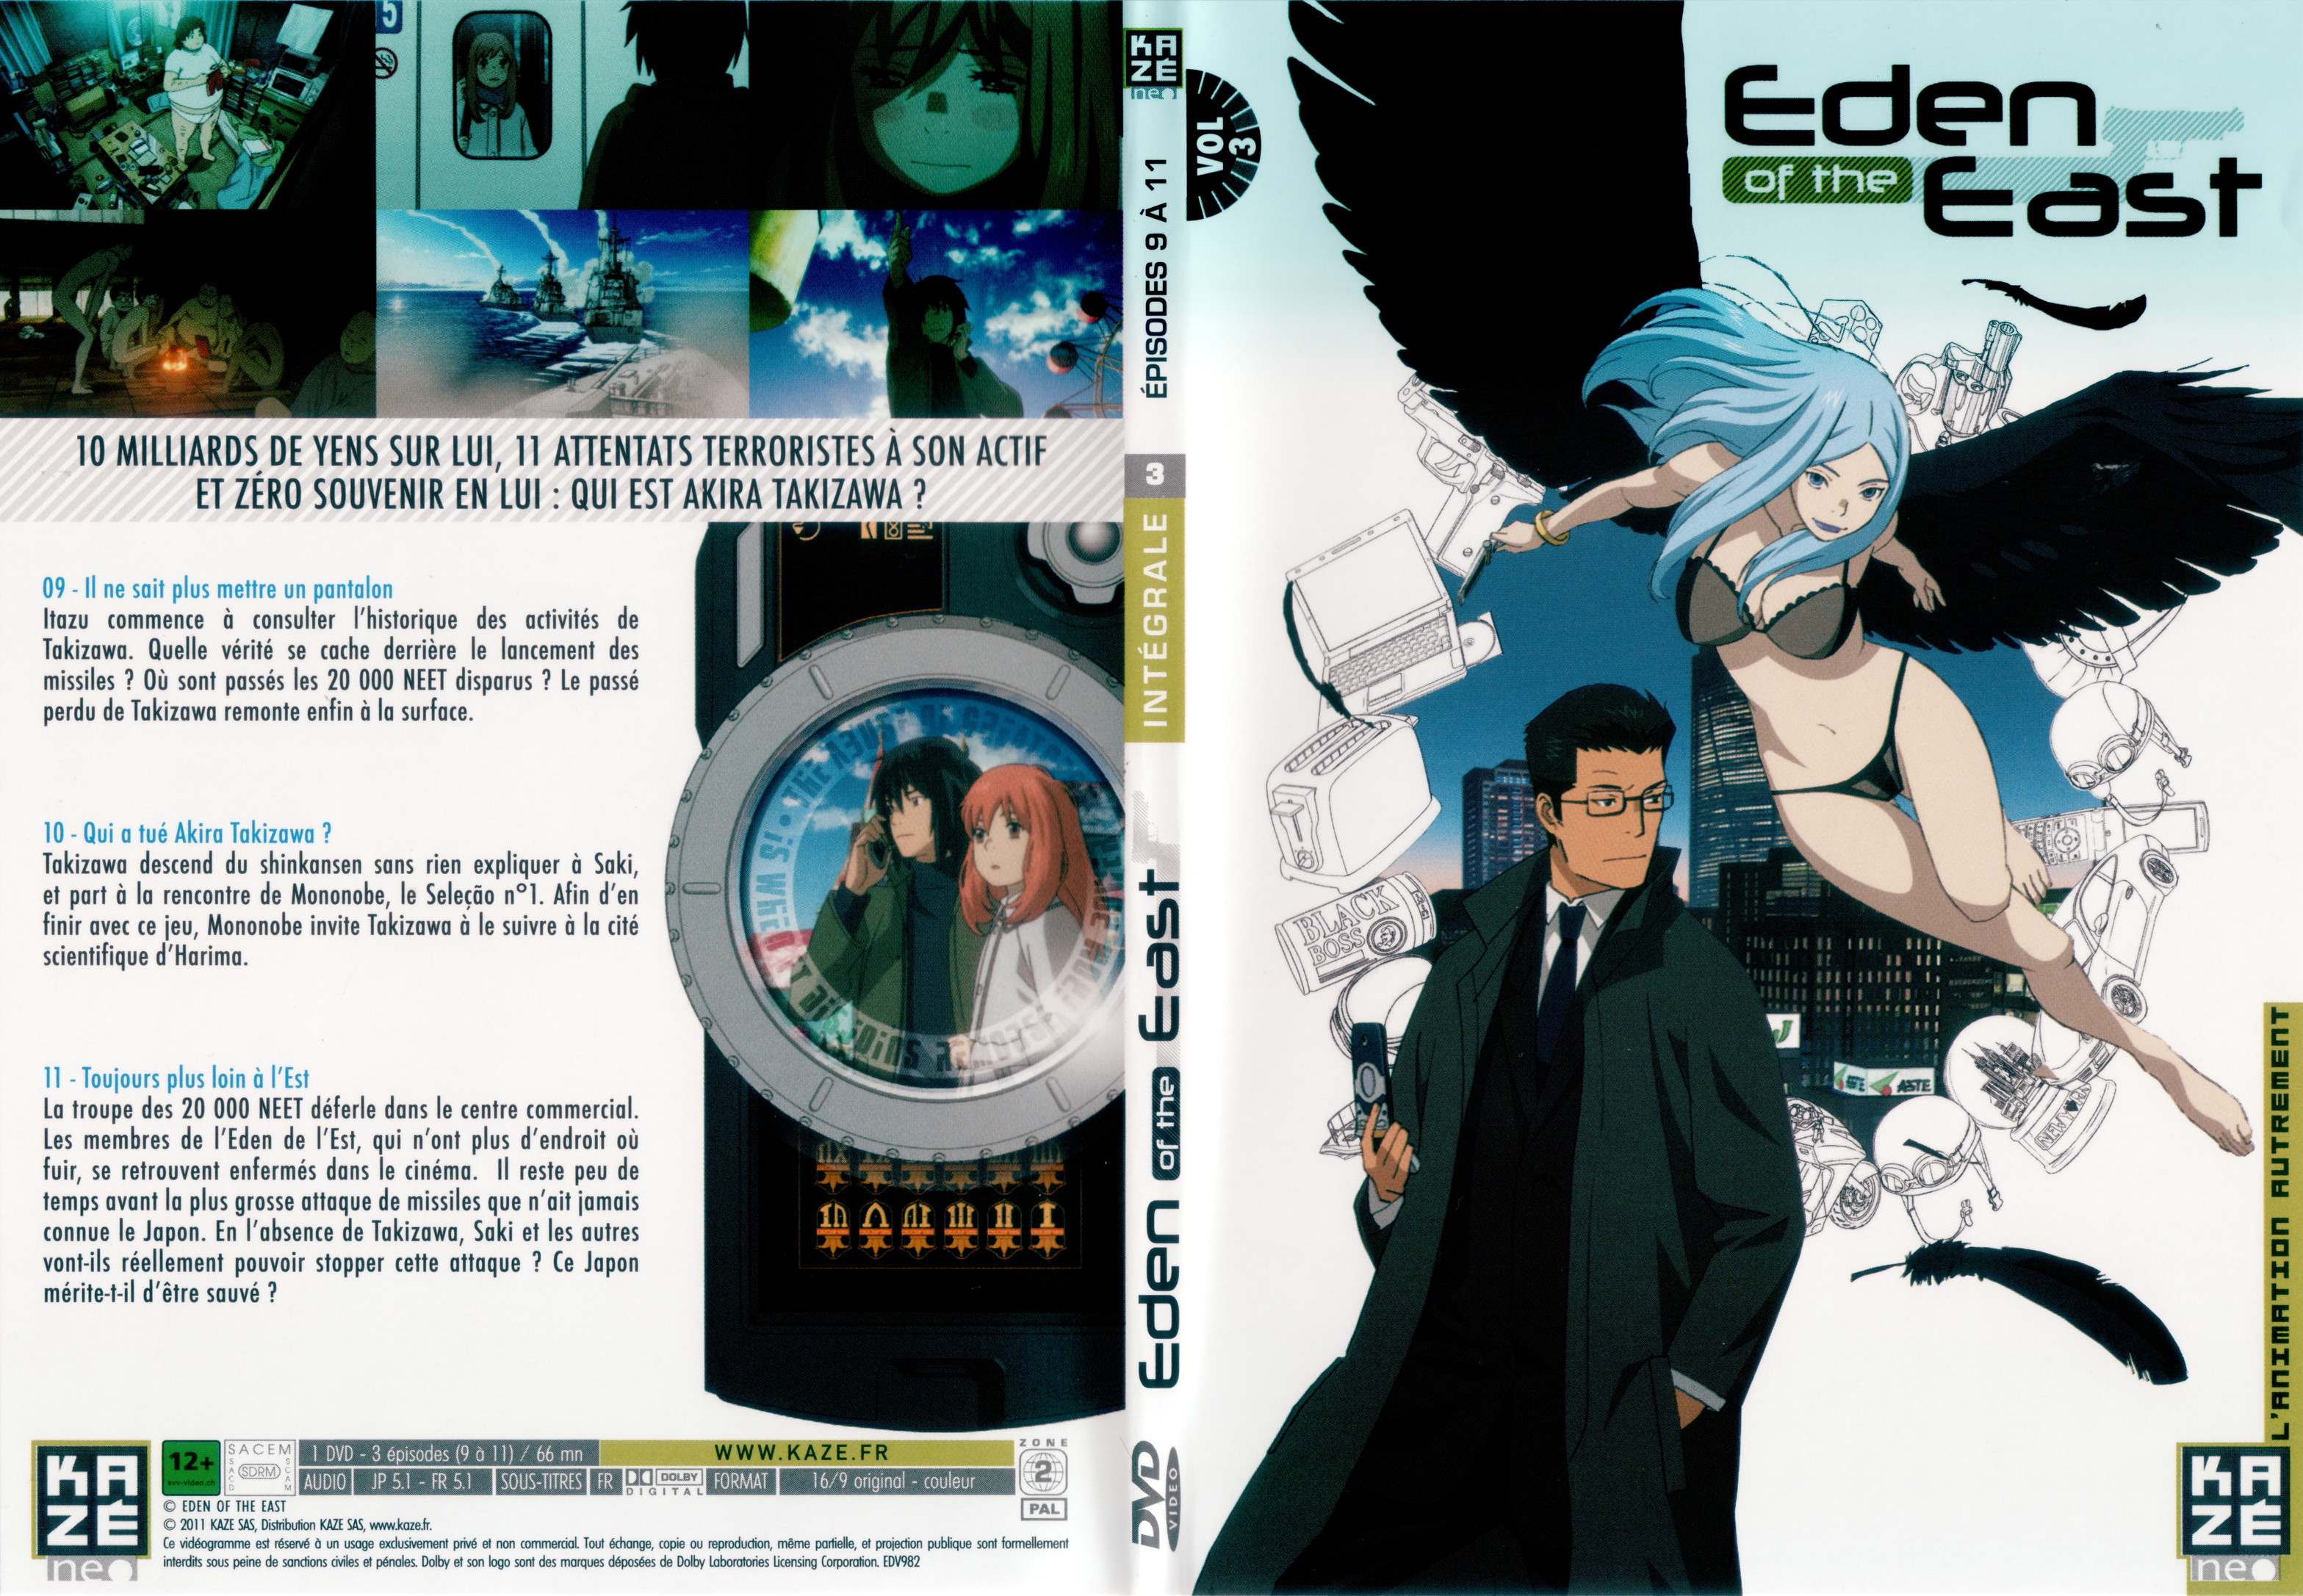 Jaquette DVD Eden of the east Intgrale vol 03